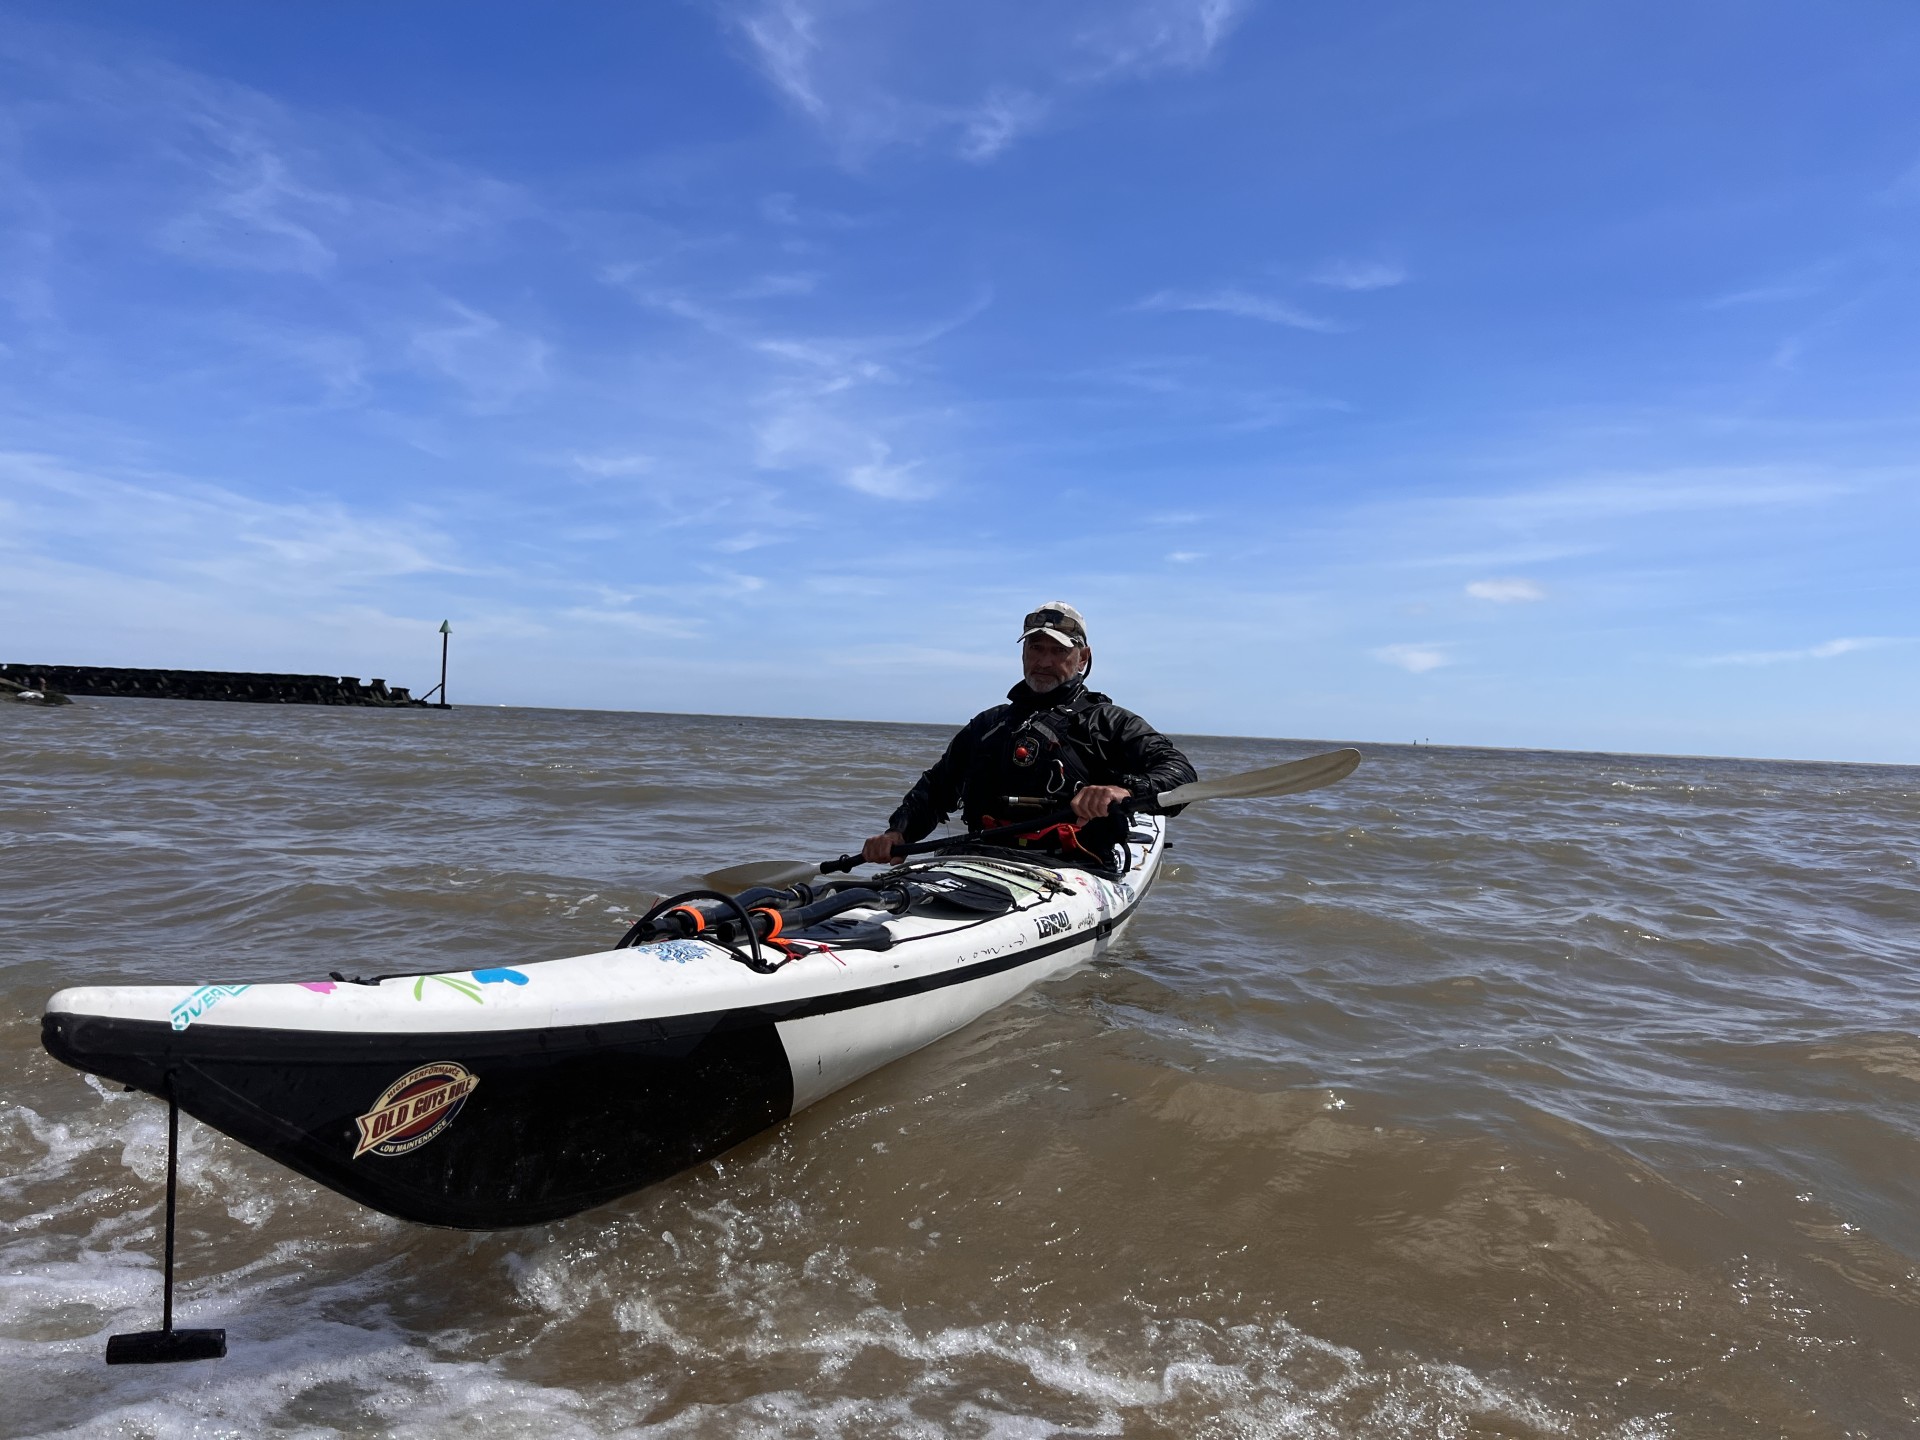 A paddler in a white & black NDK Explorer composite sea kayak.